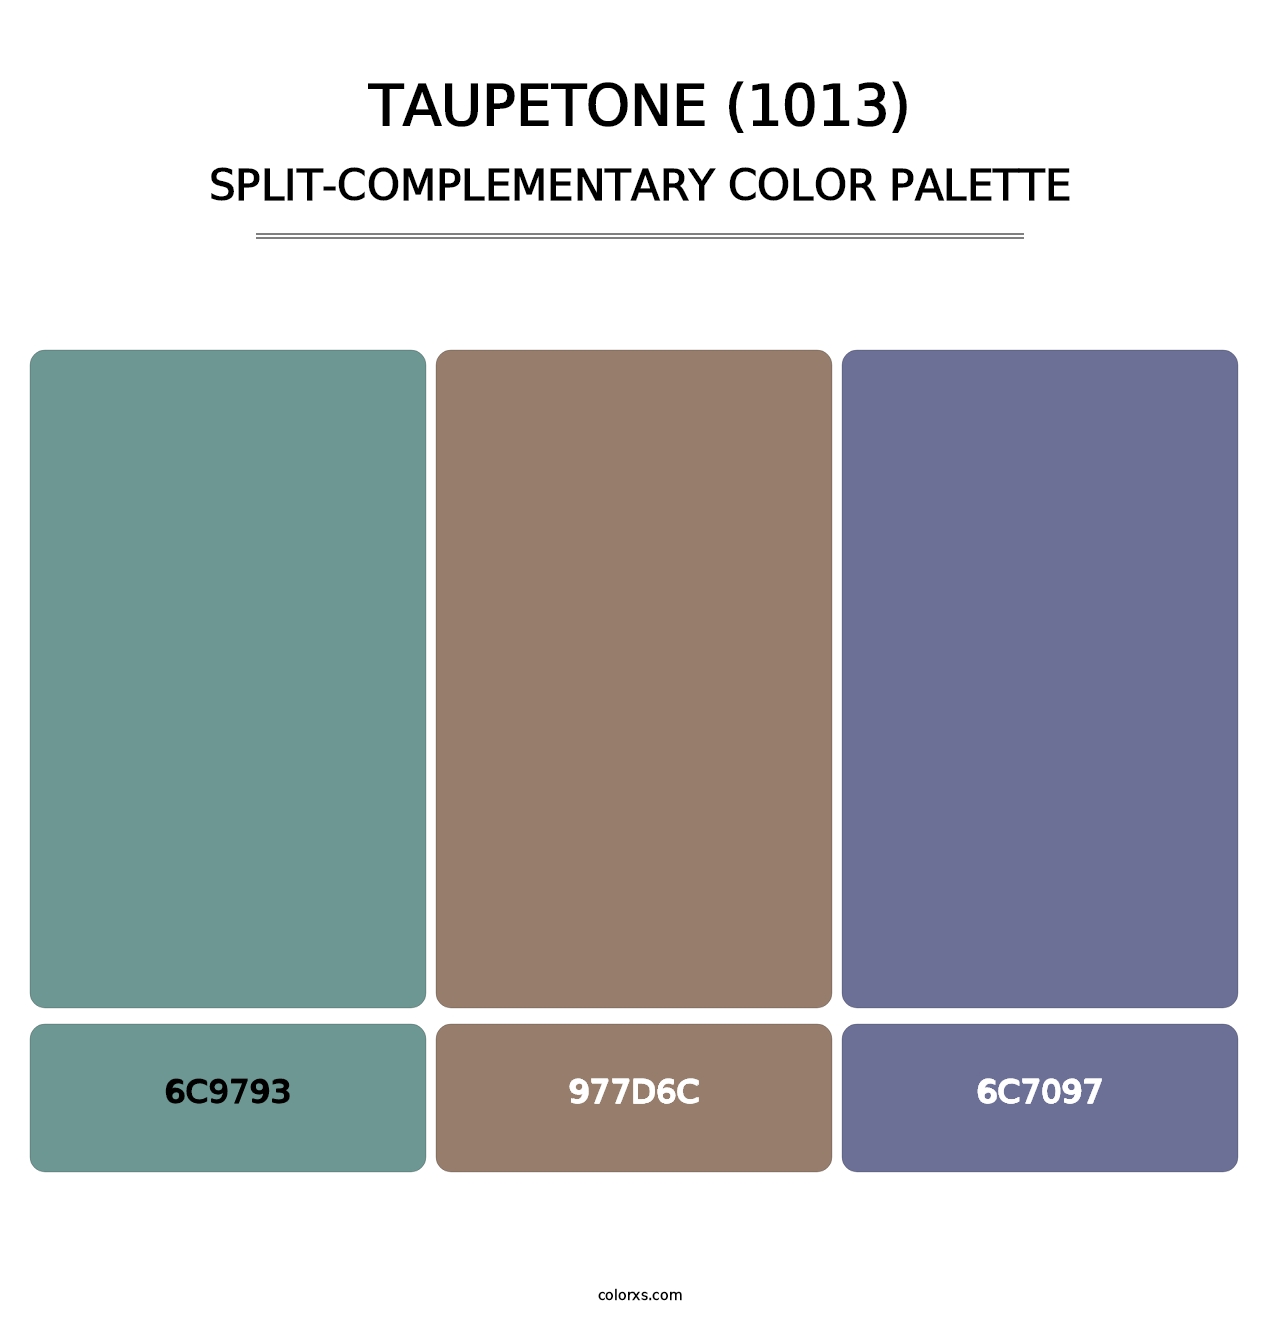 Taupetone (1013) - Split-Complementary Color Palette